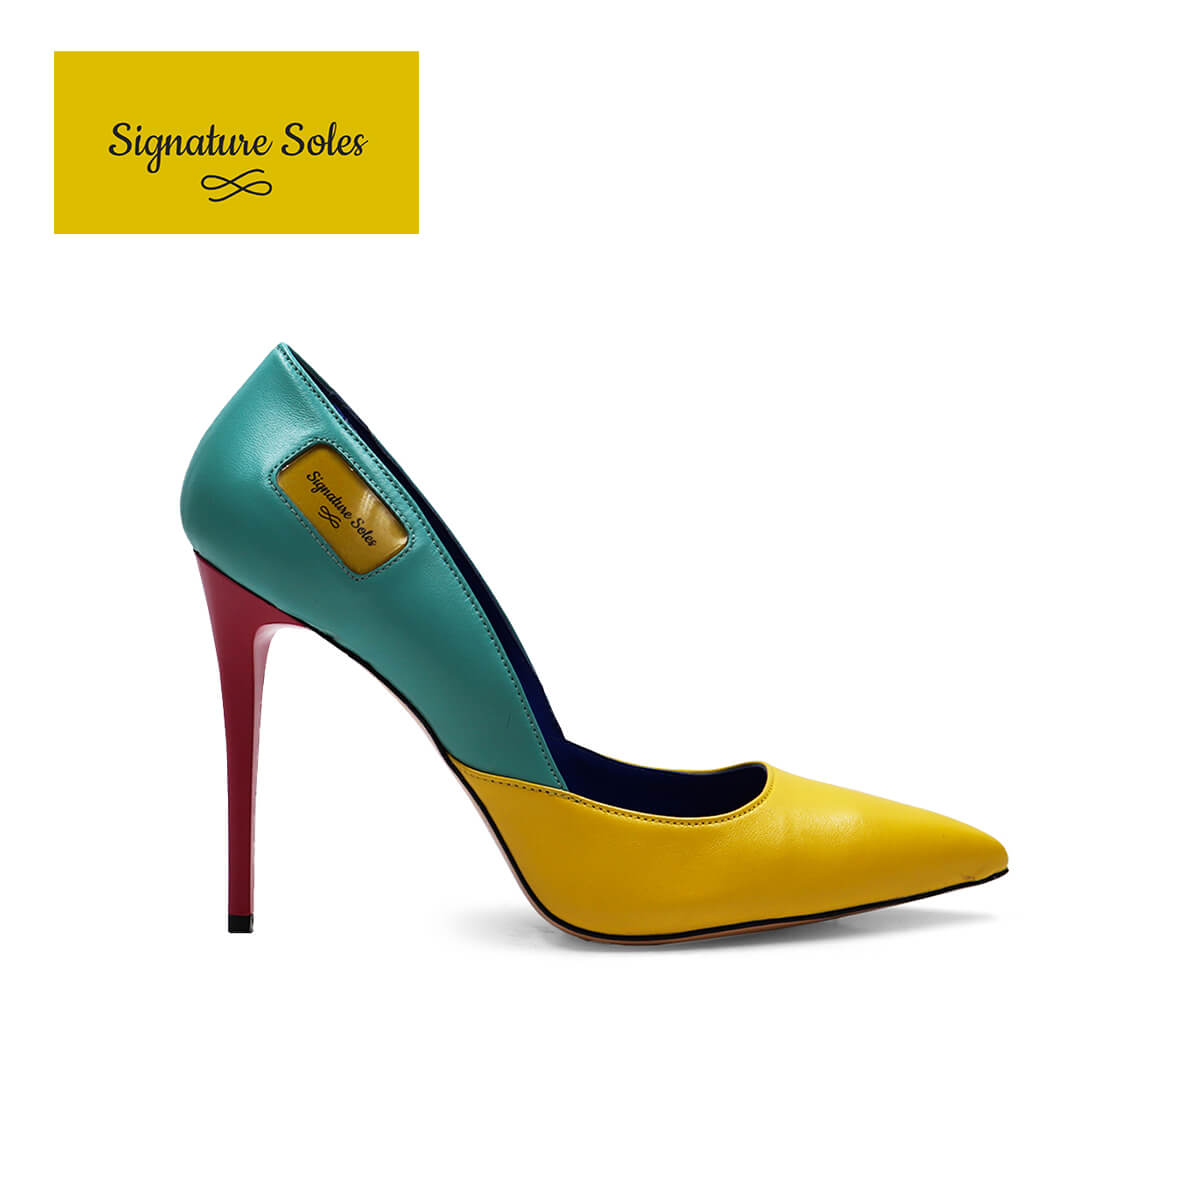 SIGNATURE SOLES by Terra Barnes – The Shoe Circle